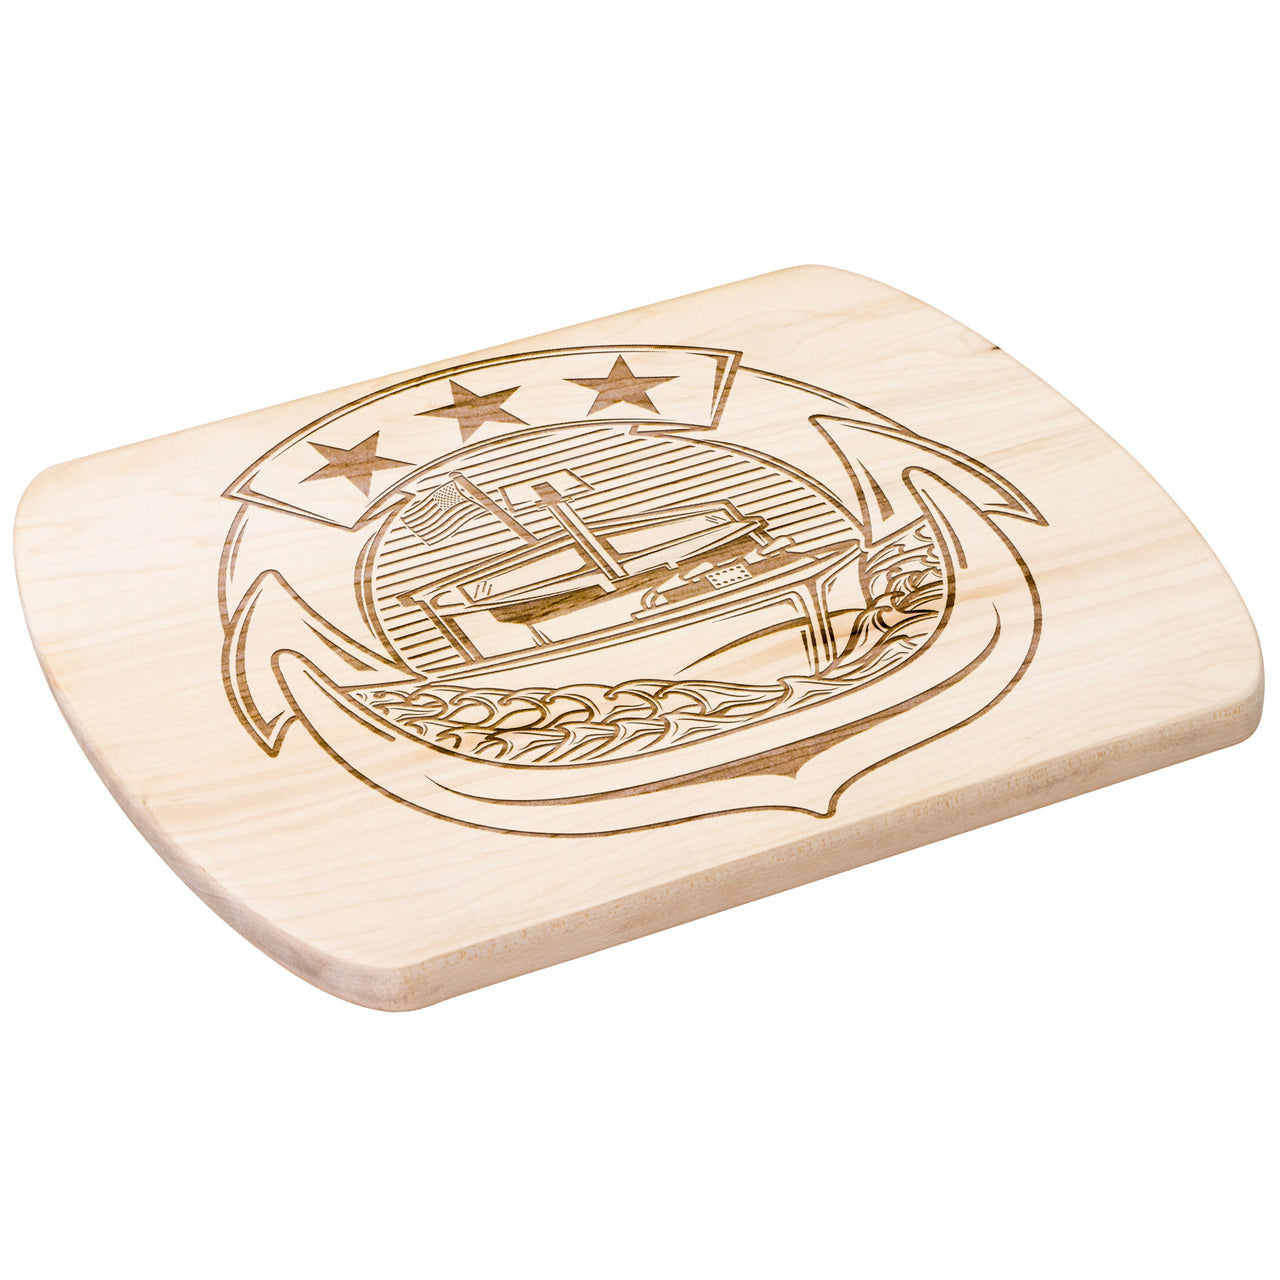 Artisan-Crafted American Hardwood Cutting Boards: CC Pin